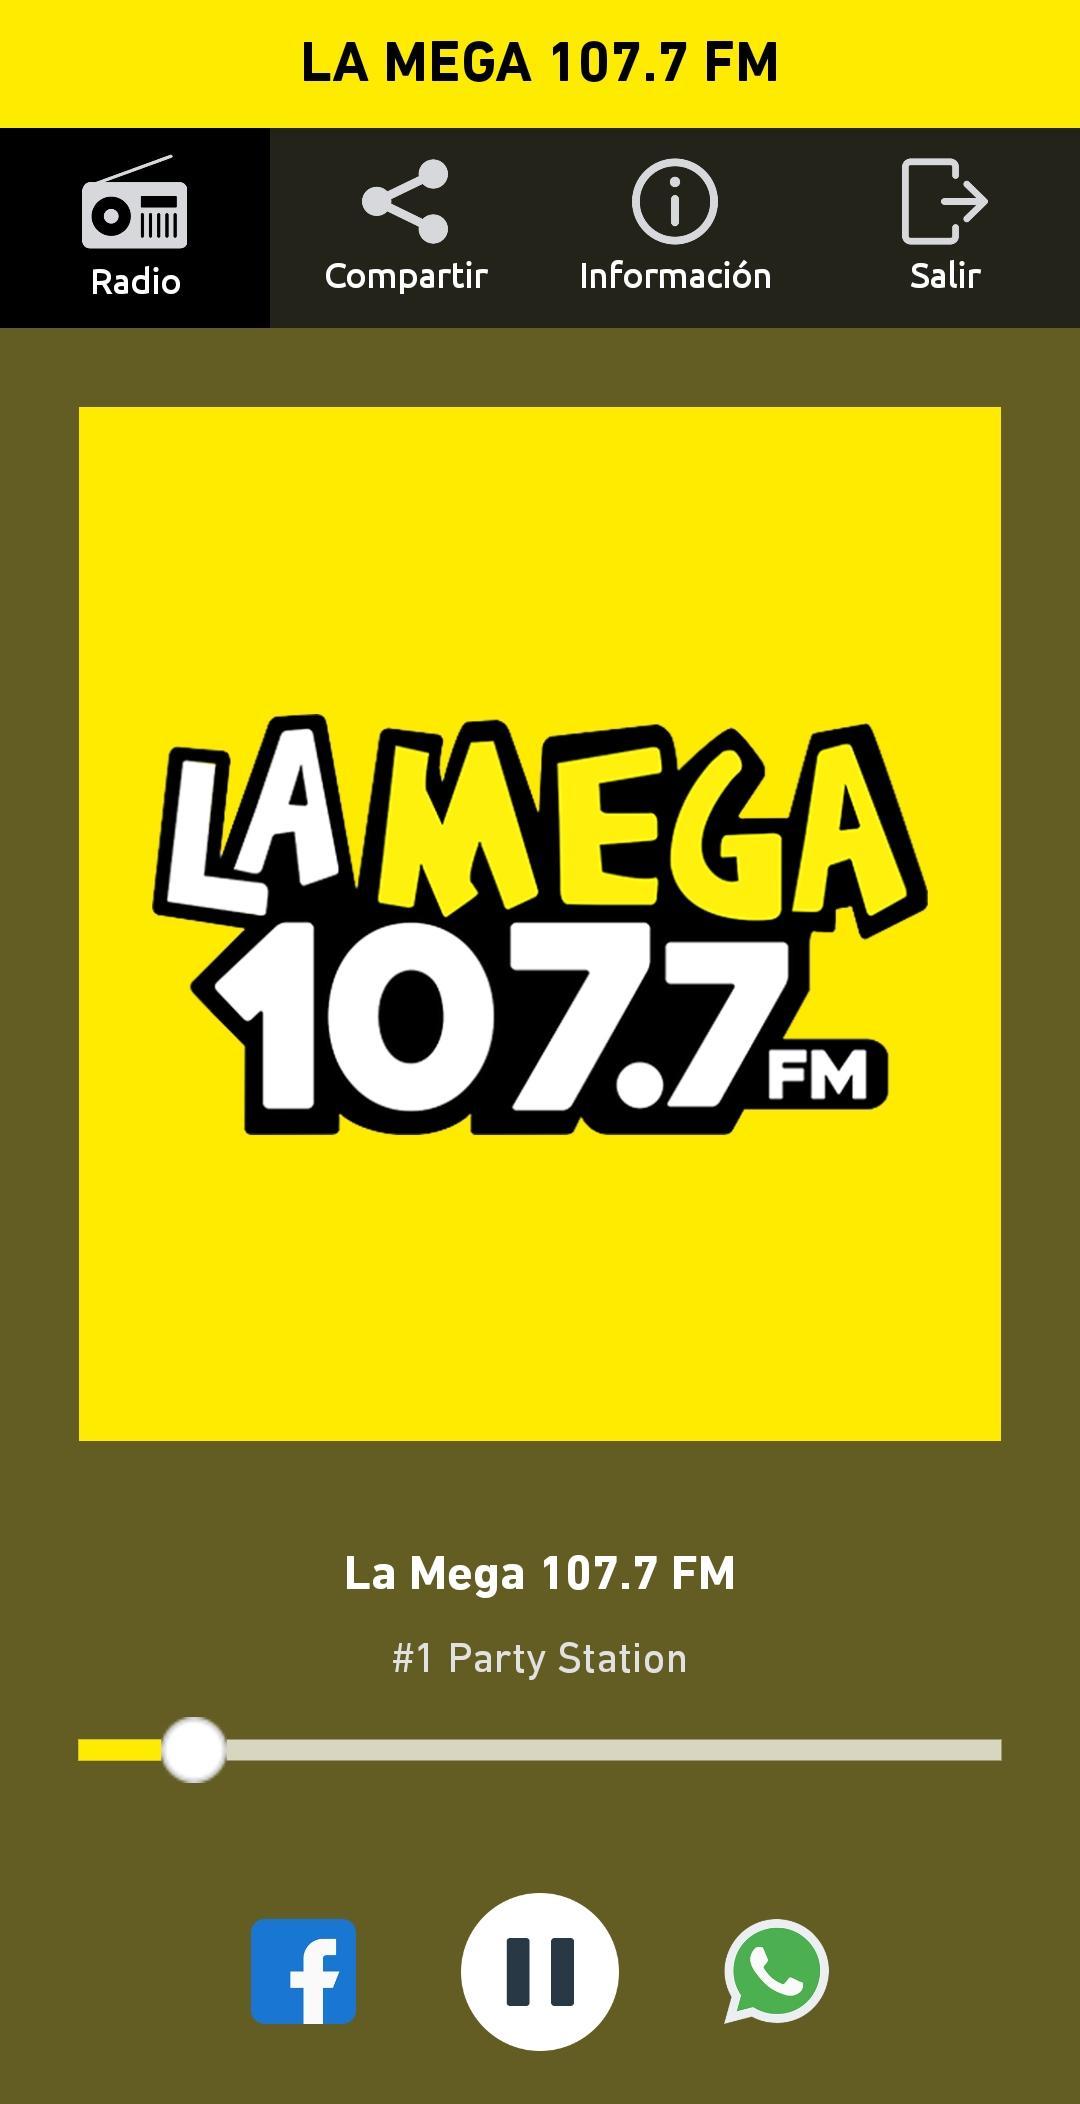 La Mega 107.7 FM for Android - APK Download